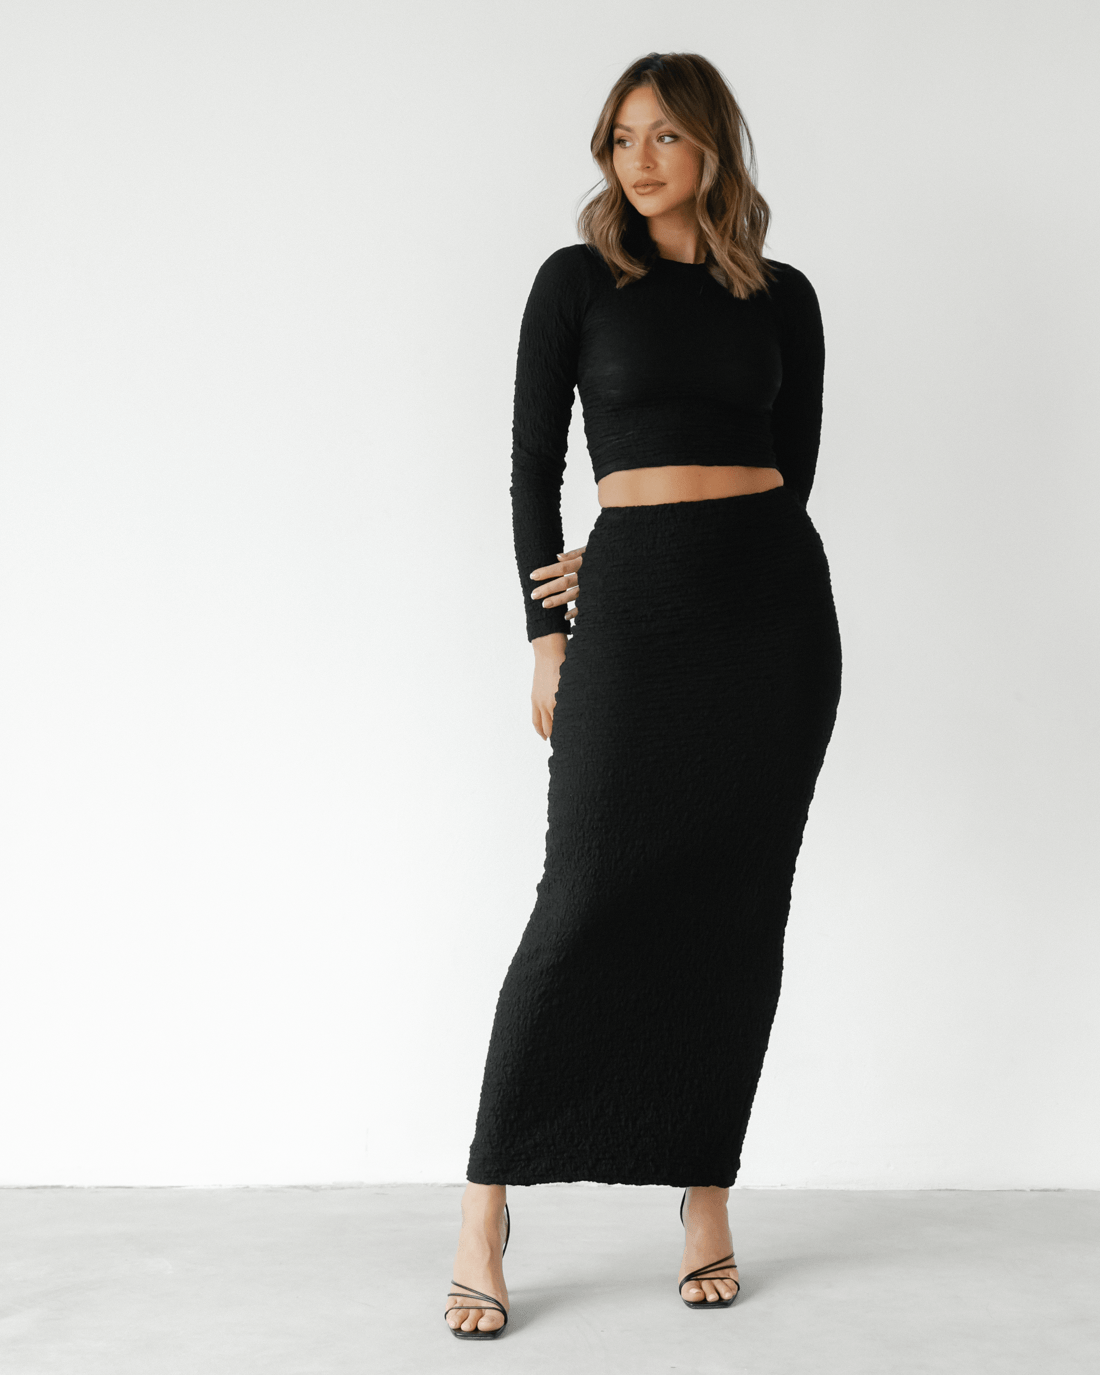 Ellah Maxi Skirt (Black) - Black Textured Maxi Skirt - Women's Skirts - Charcoal Clothing